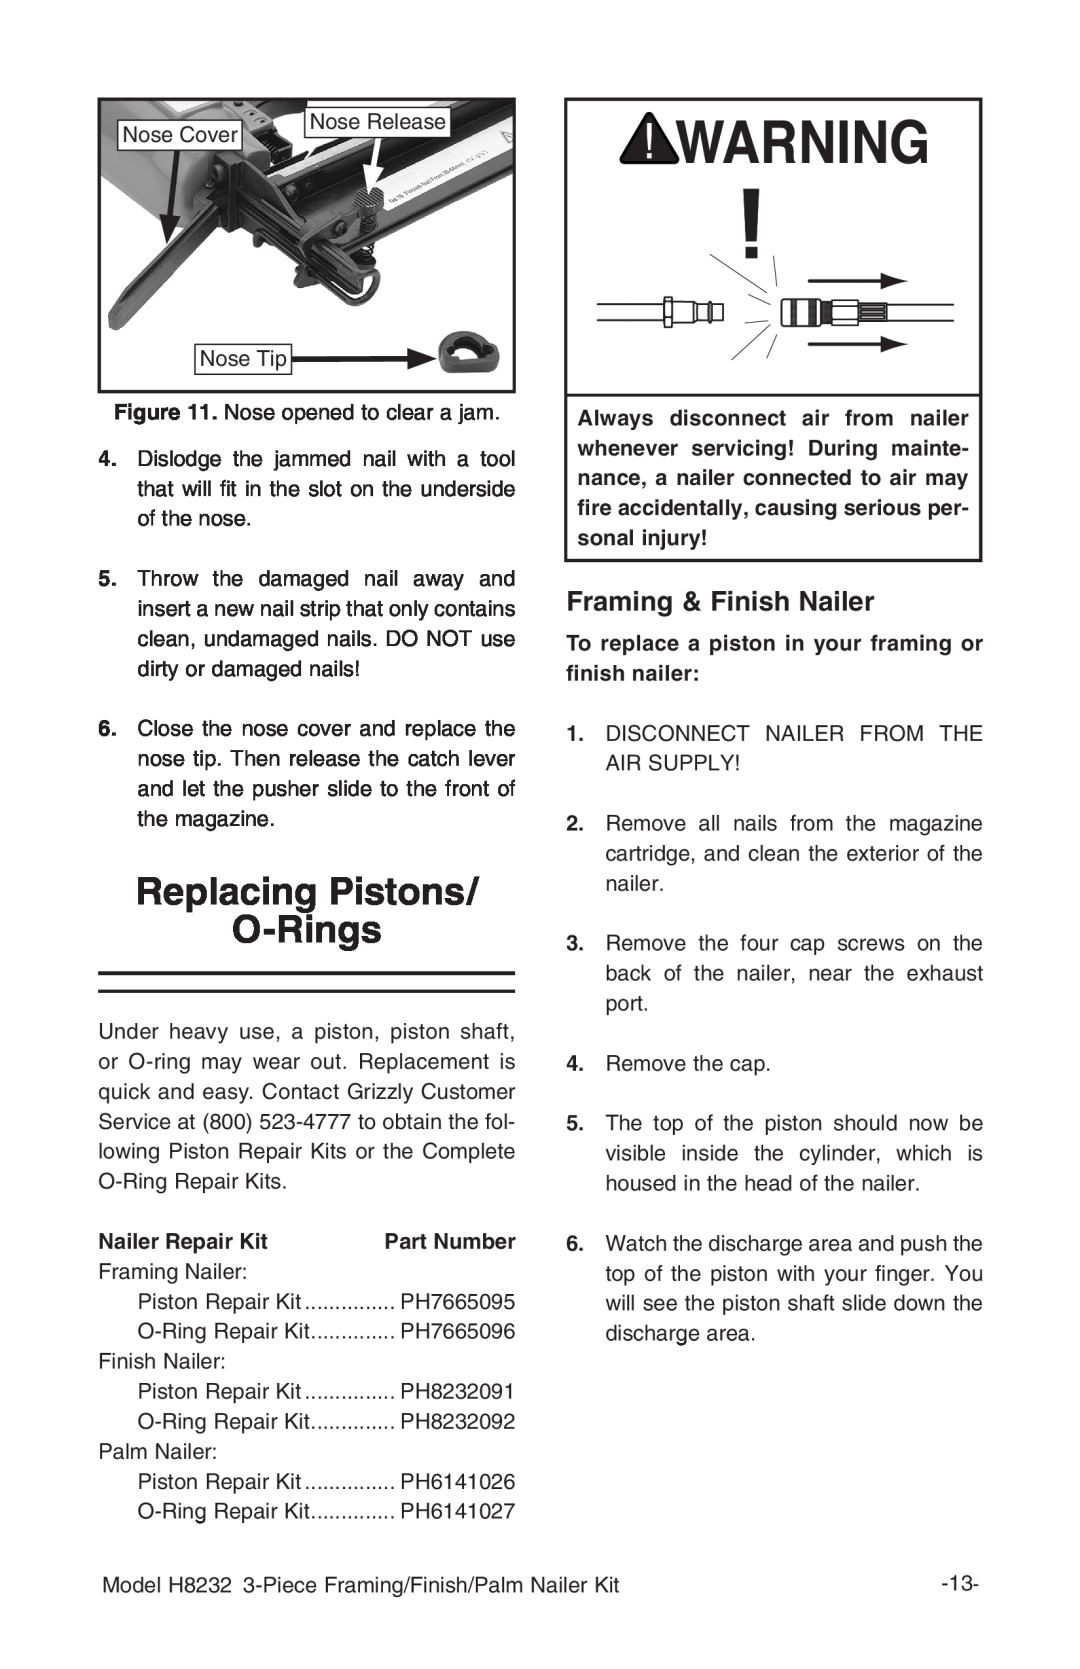 Grizzly H8232 owner manual Replacing Pistons O-Rings, Framing & Finish Nailer, Nailer Repair Kit 